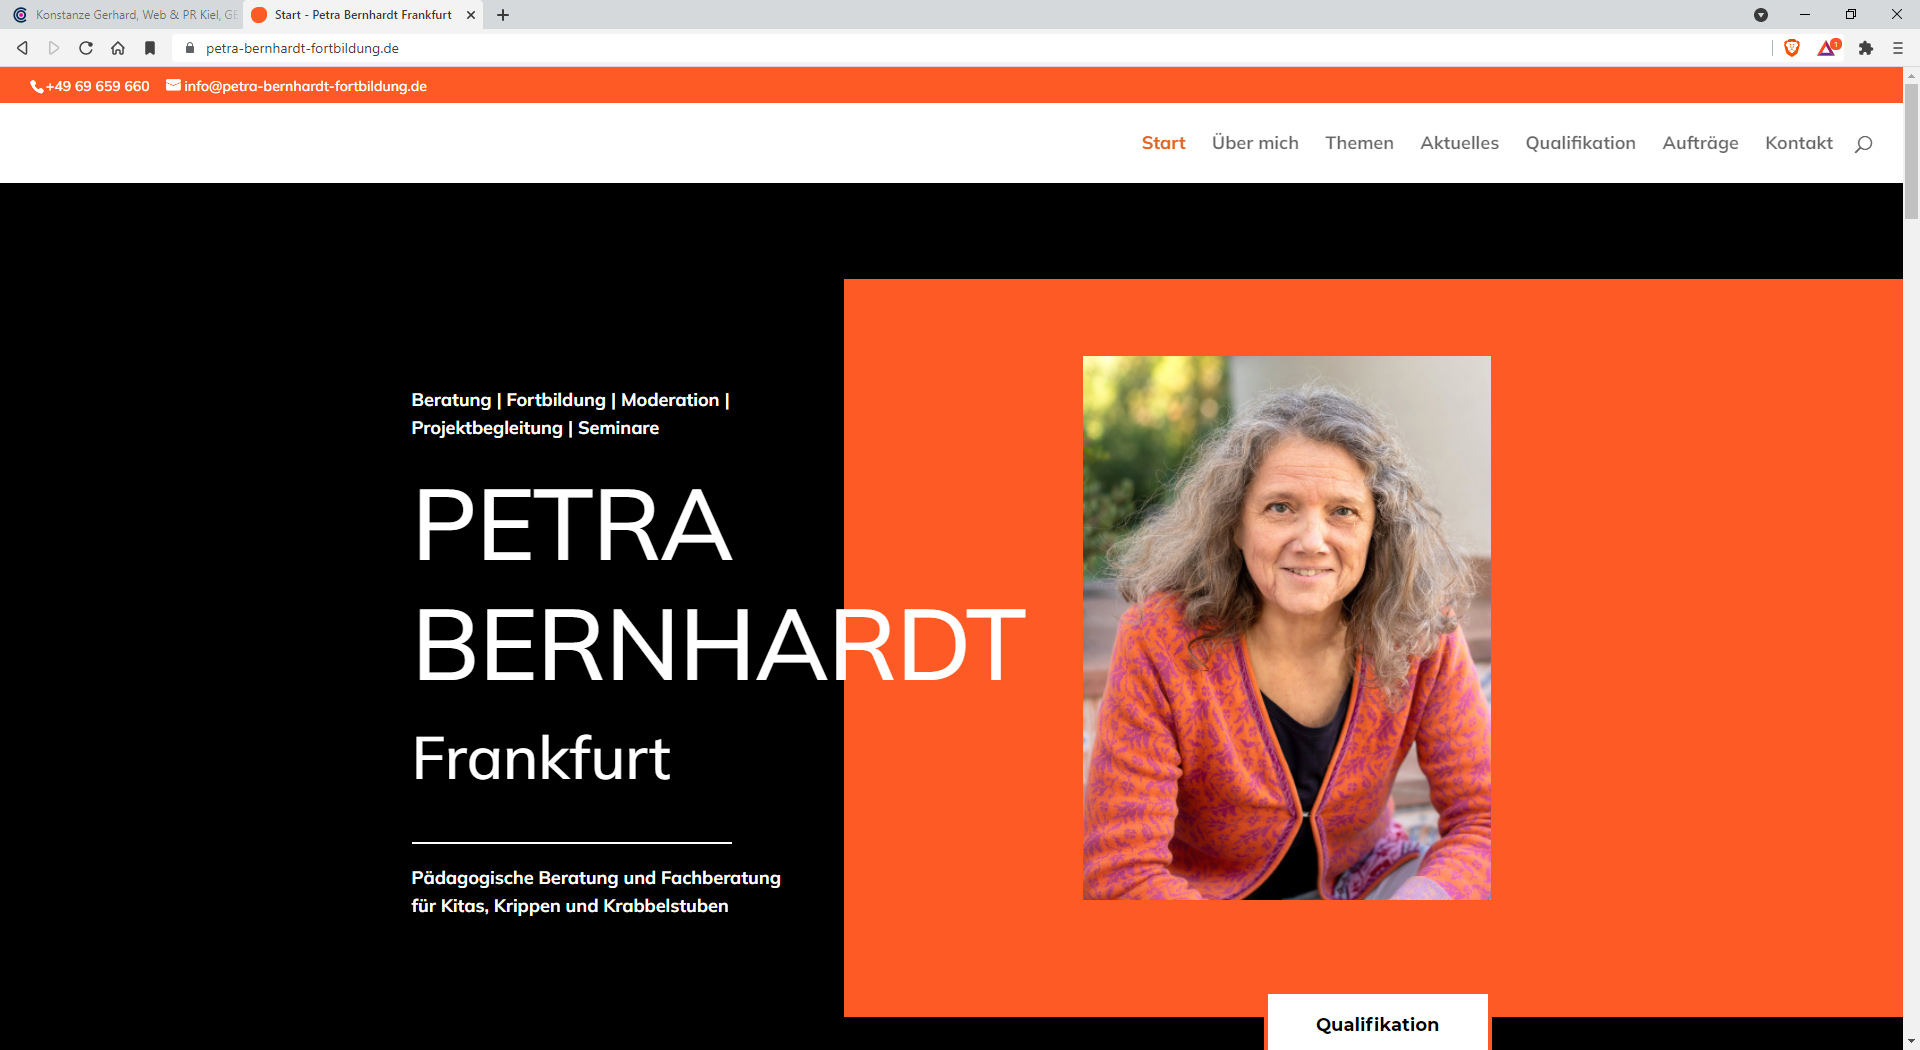 (c) Petra-bernhardt-fortbildung.de